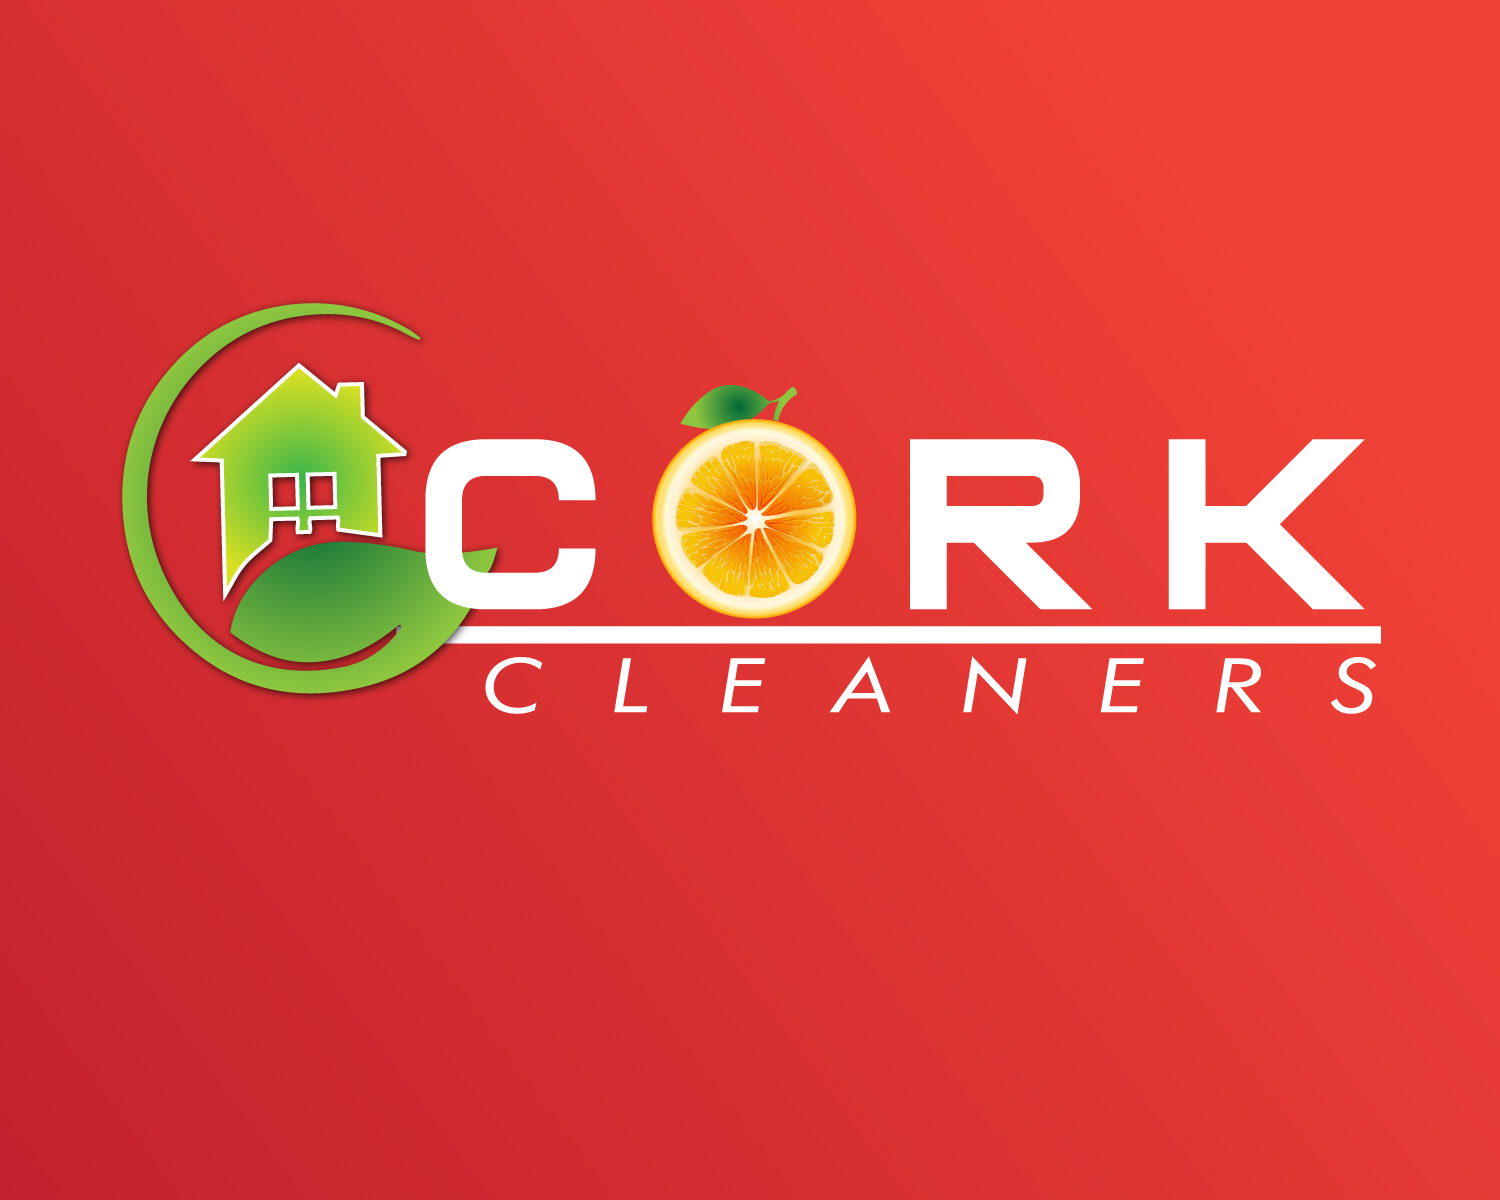 Cork's Carpet Cleaning & Floor Care Logo